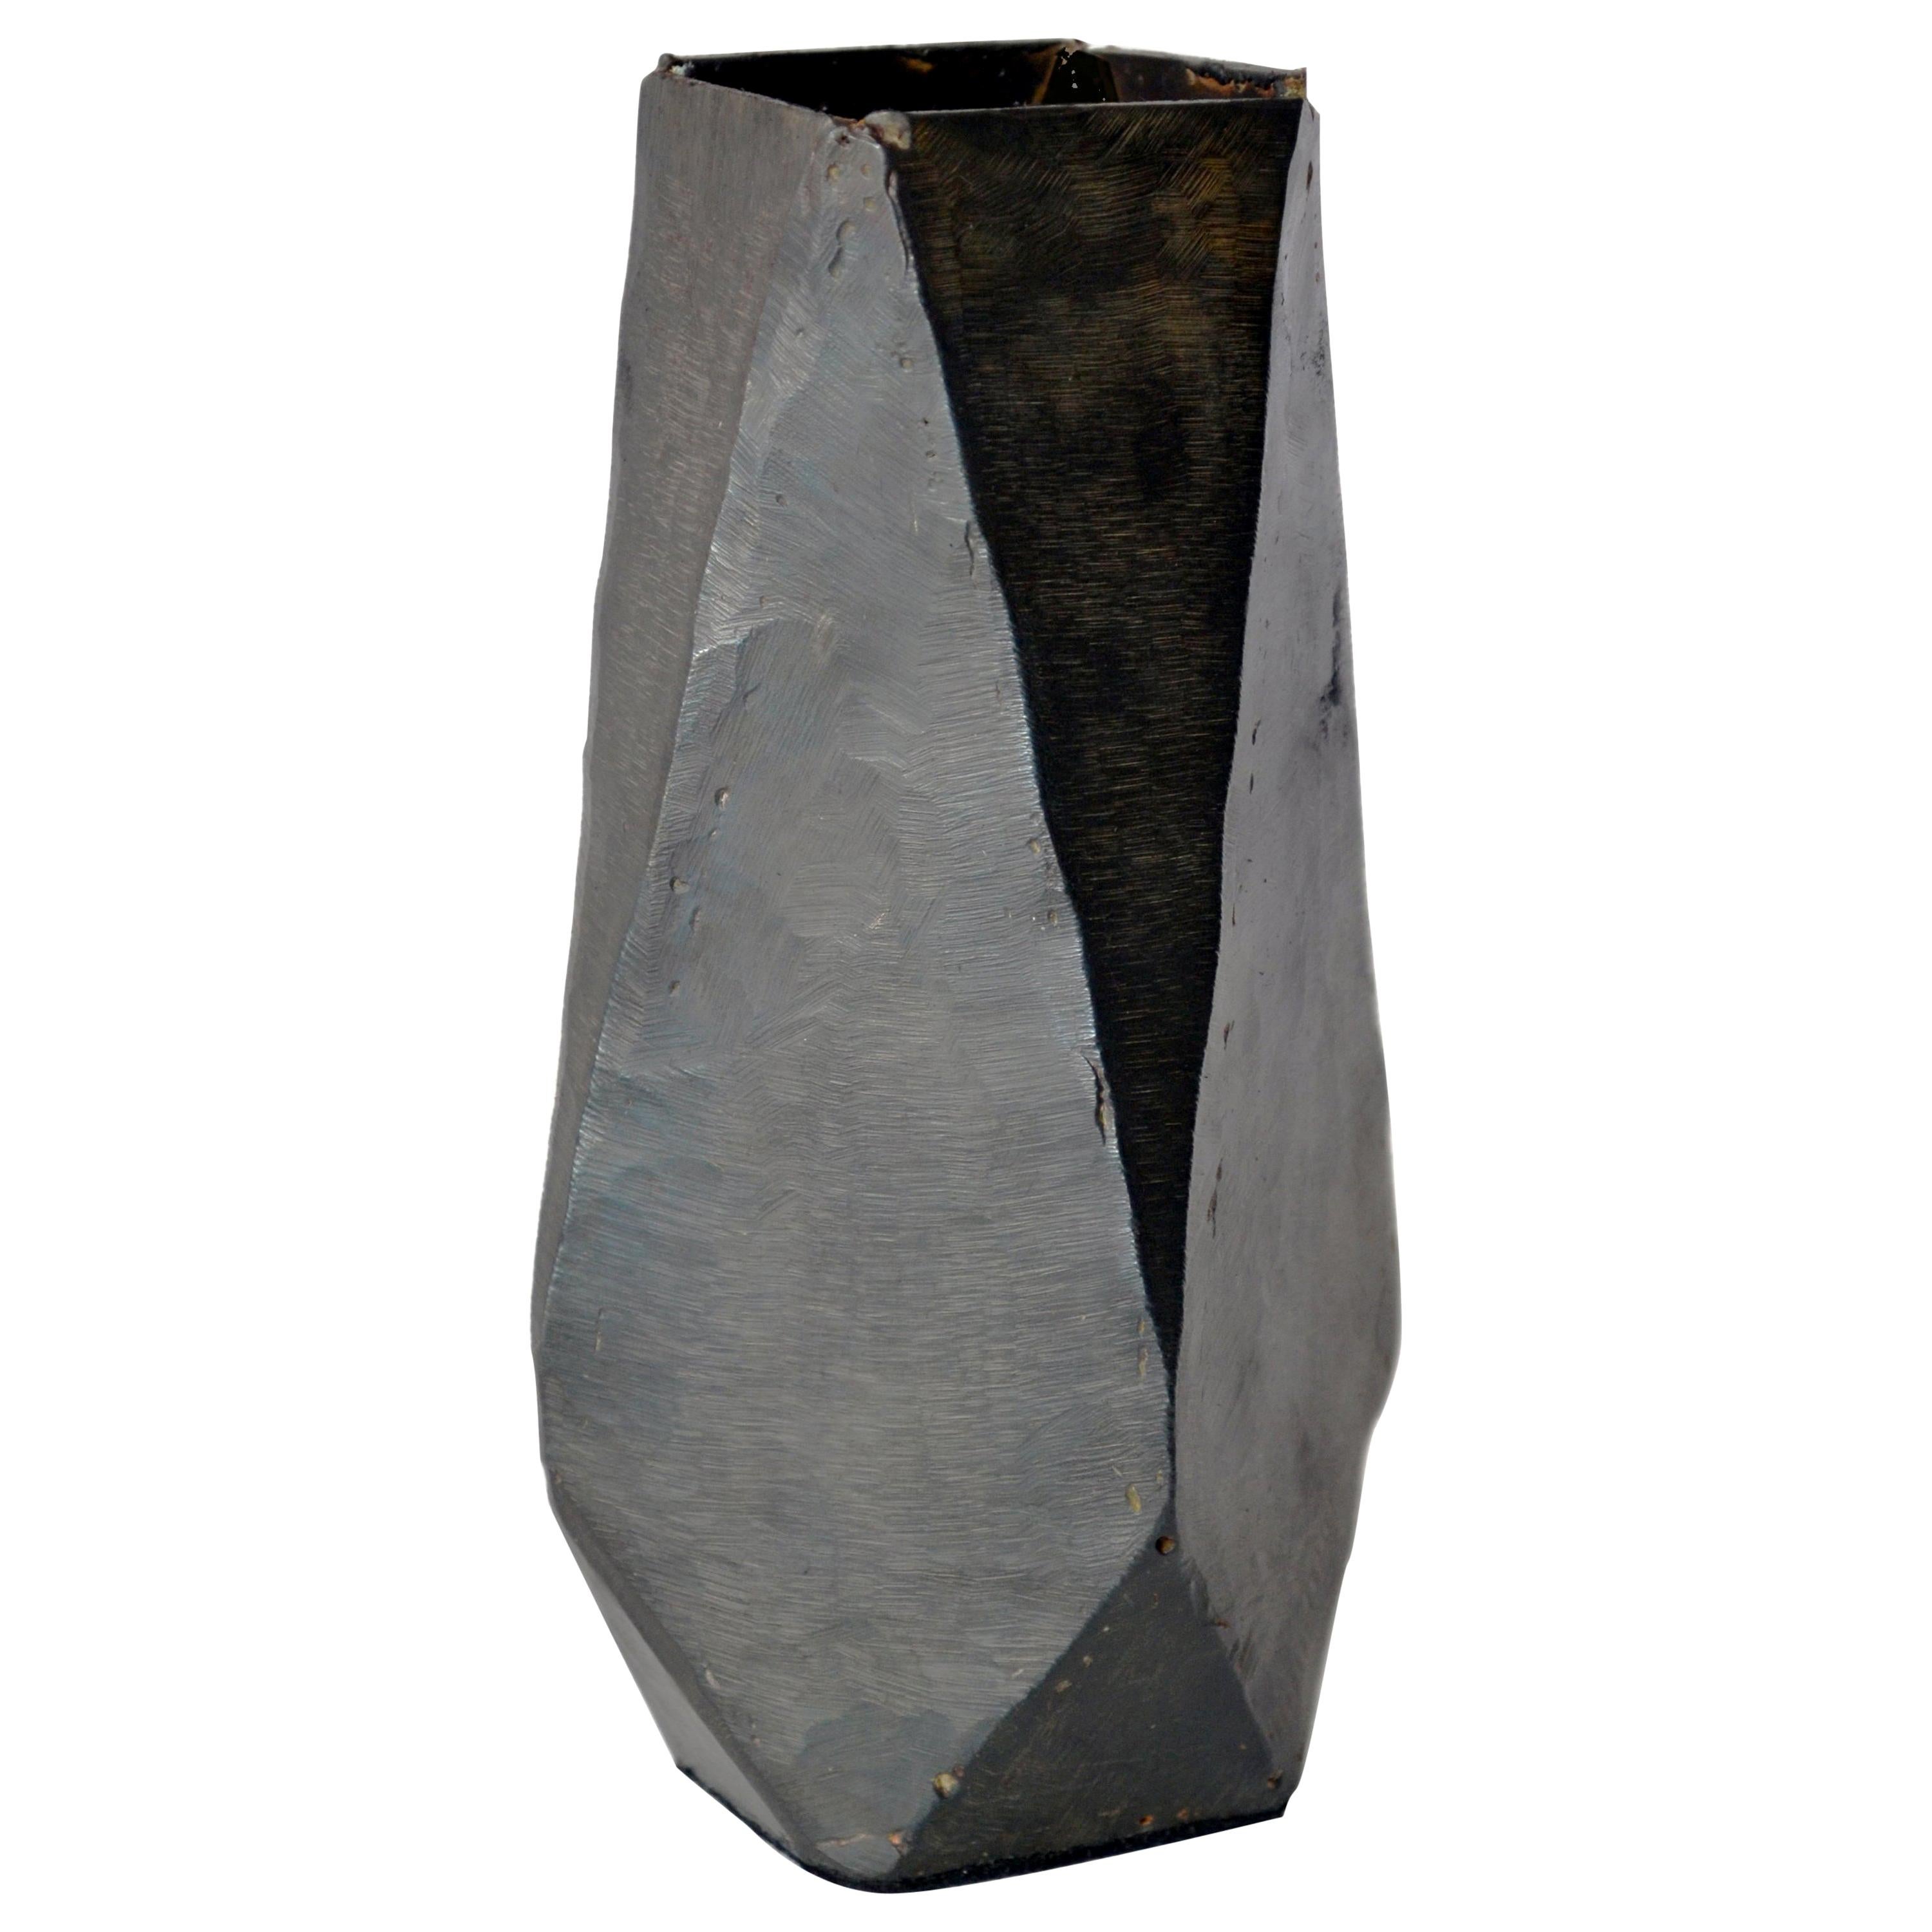 Geometric Vessel Sculpture Handmade by J.M. Szymanski, Blackened and Waxed Iron